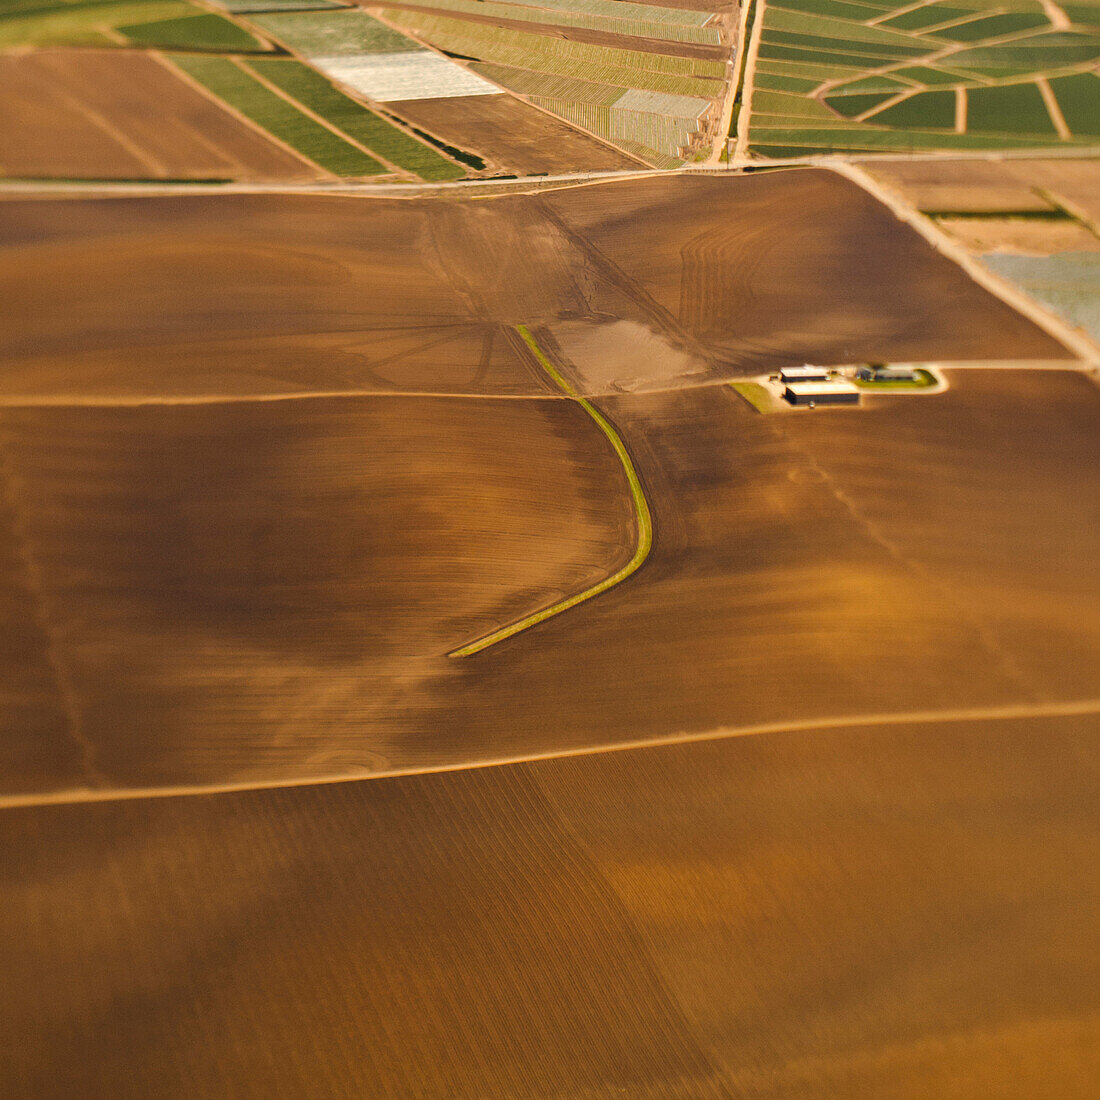 Farmland Crops, San Mateo County, California, USA